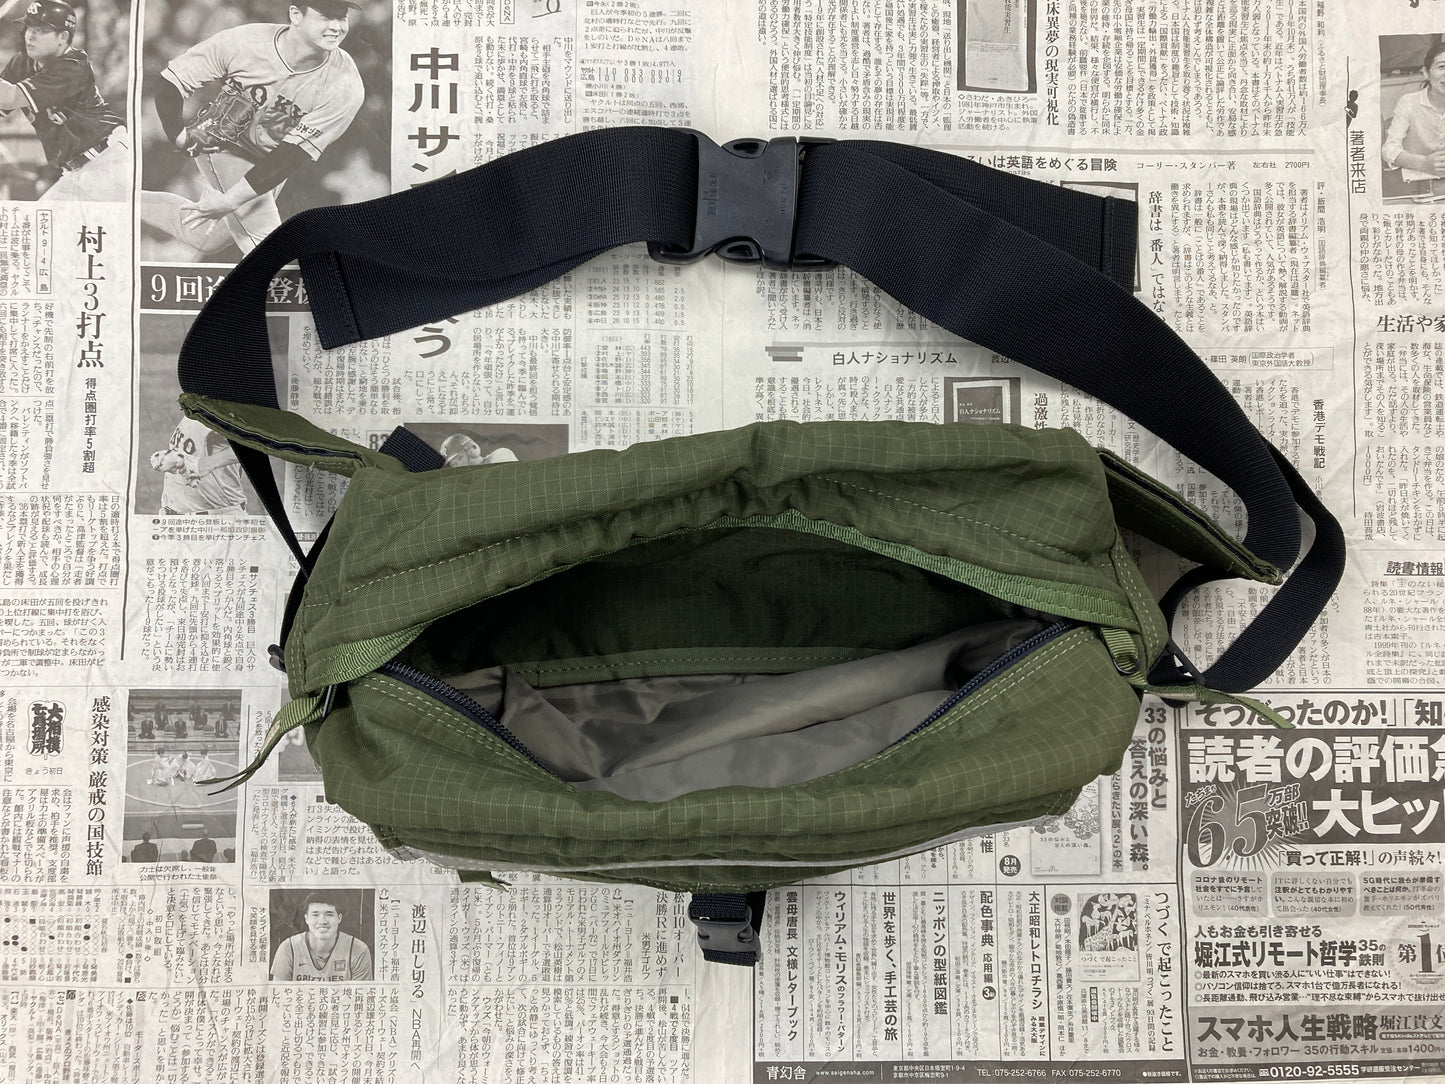 [Olive] 3M Ripstop Waist Bag